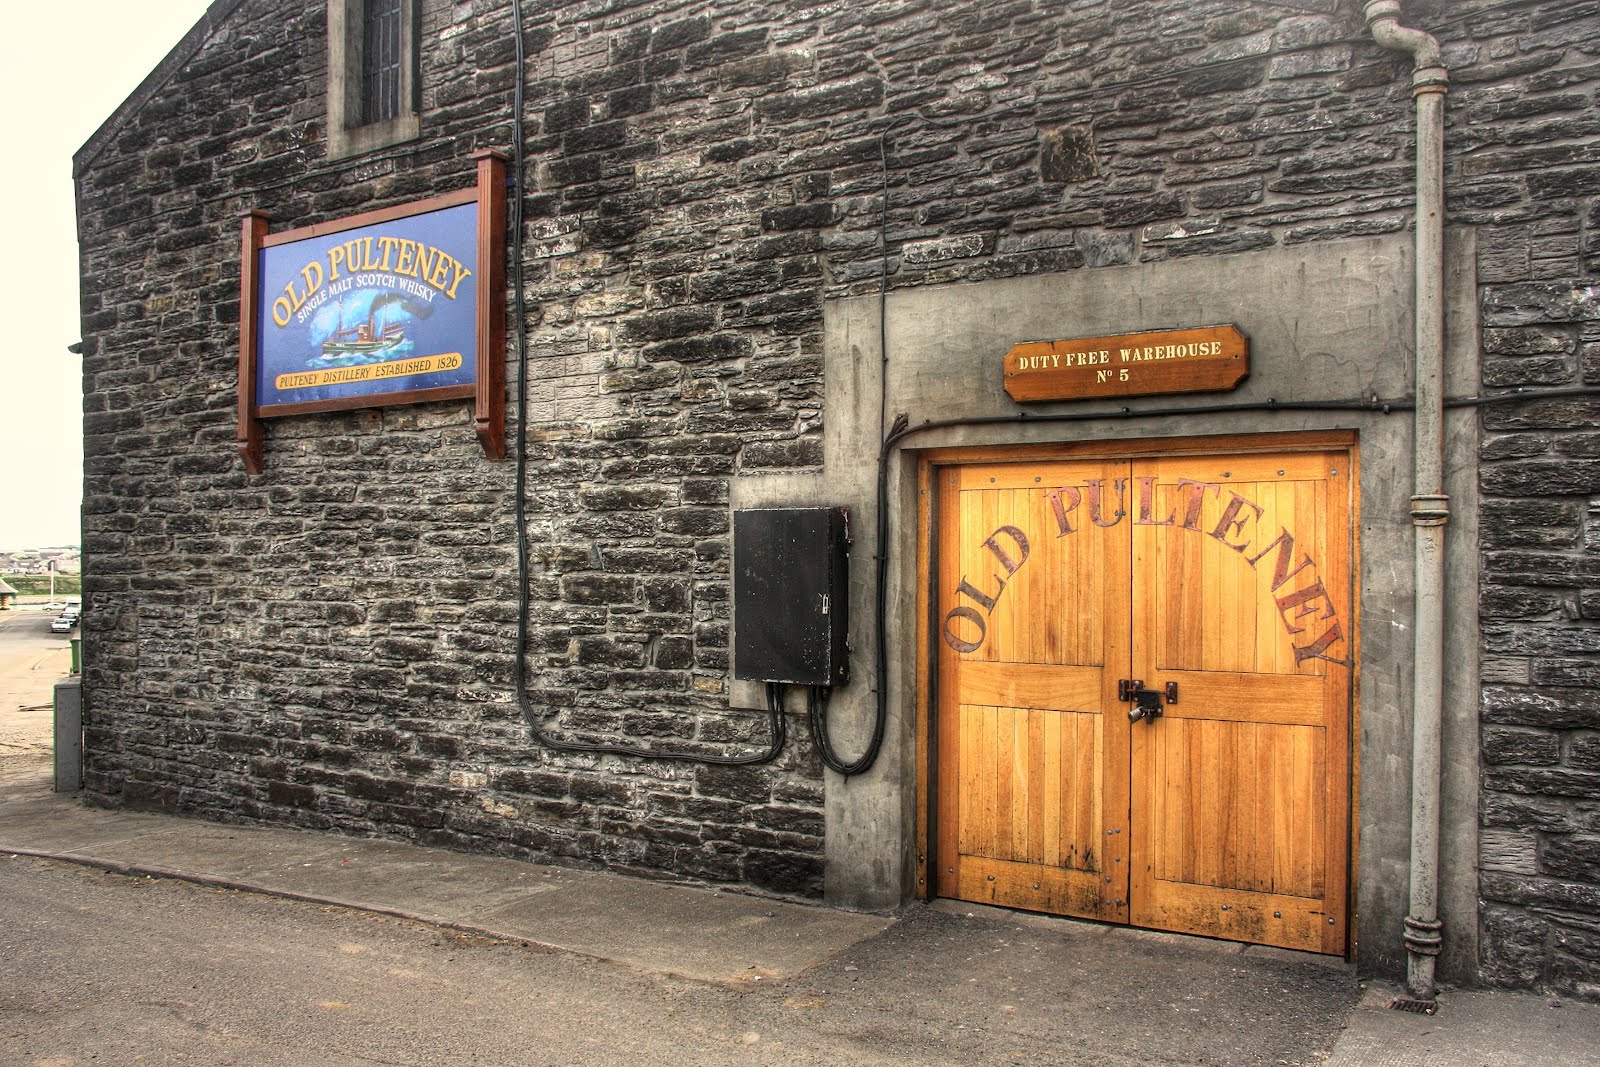 old pulteney distillery visit